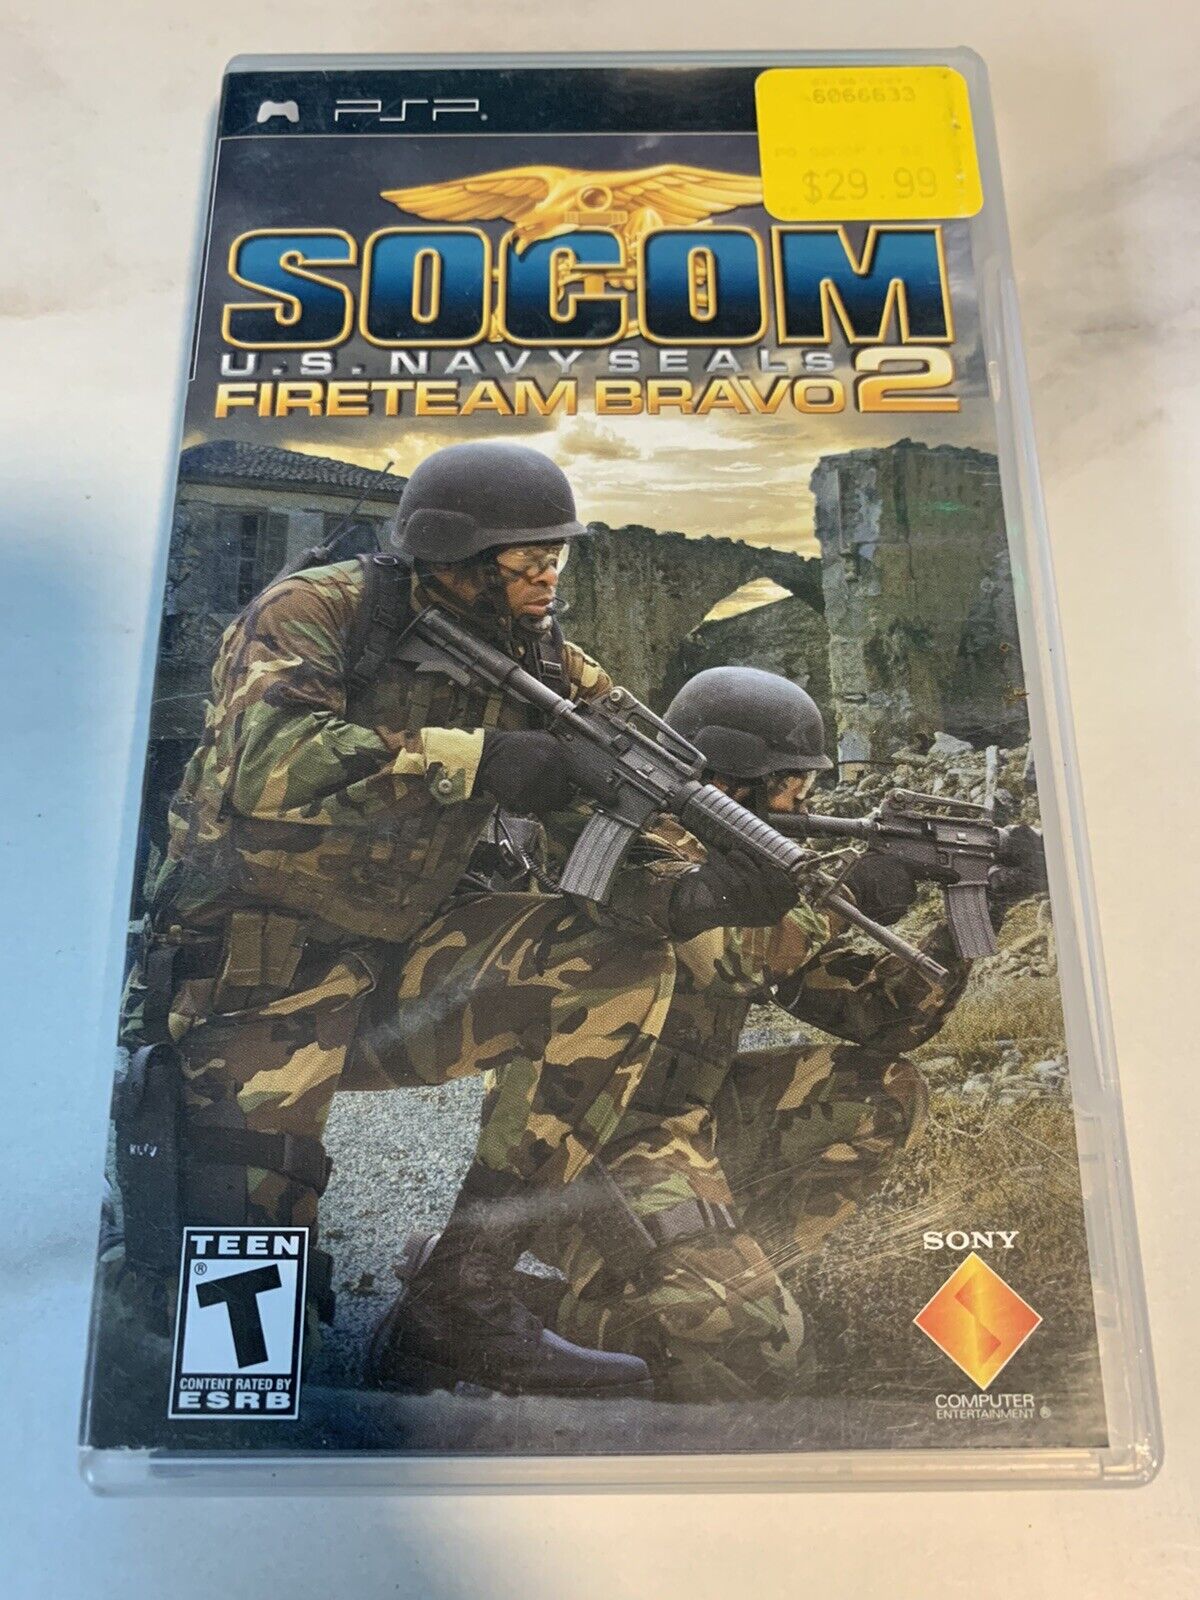 SOCOM: U.S. Navy SEALs -- Fireteam Bravo 2 (Sony PSP, 2006